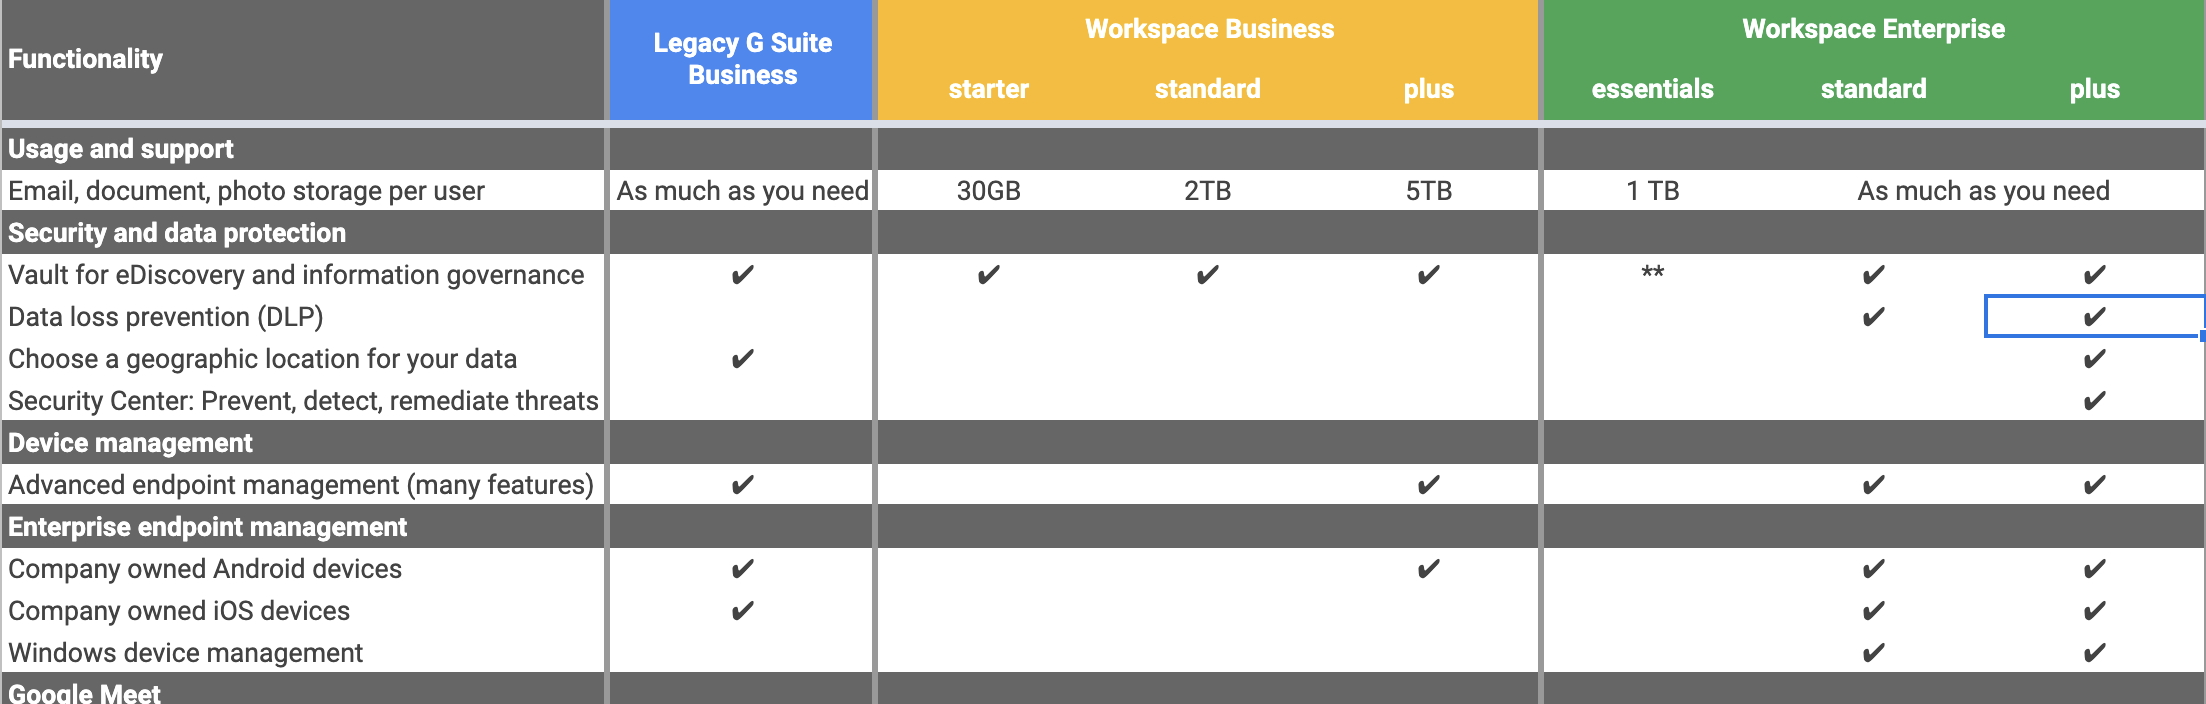 workspace vs g suite licenses cheat sheet Fourcast by Devoteam